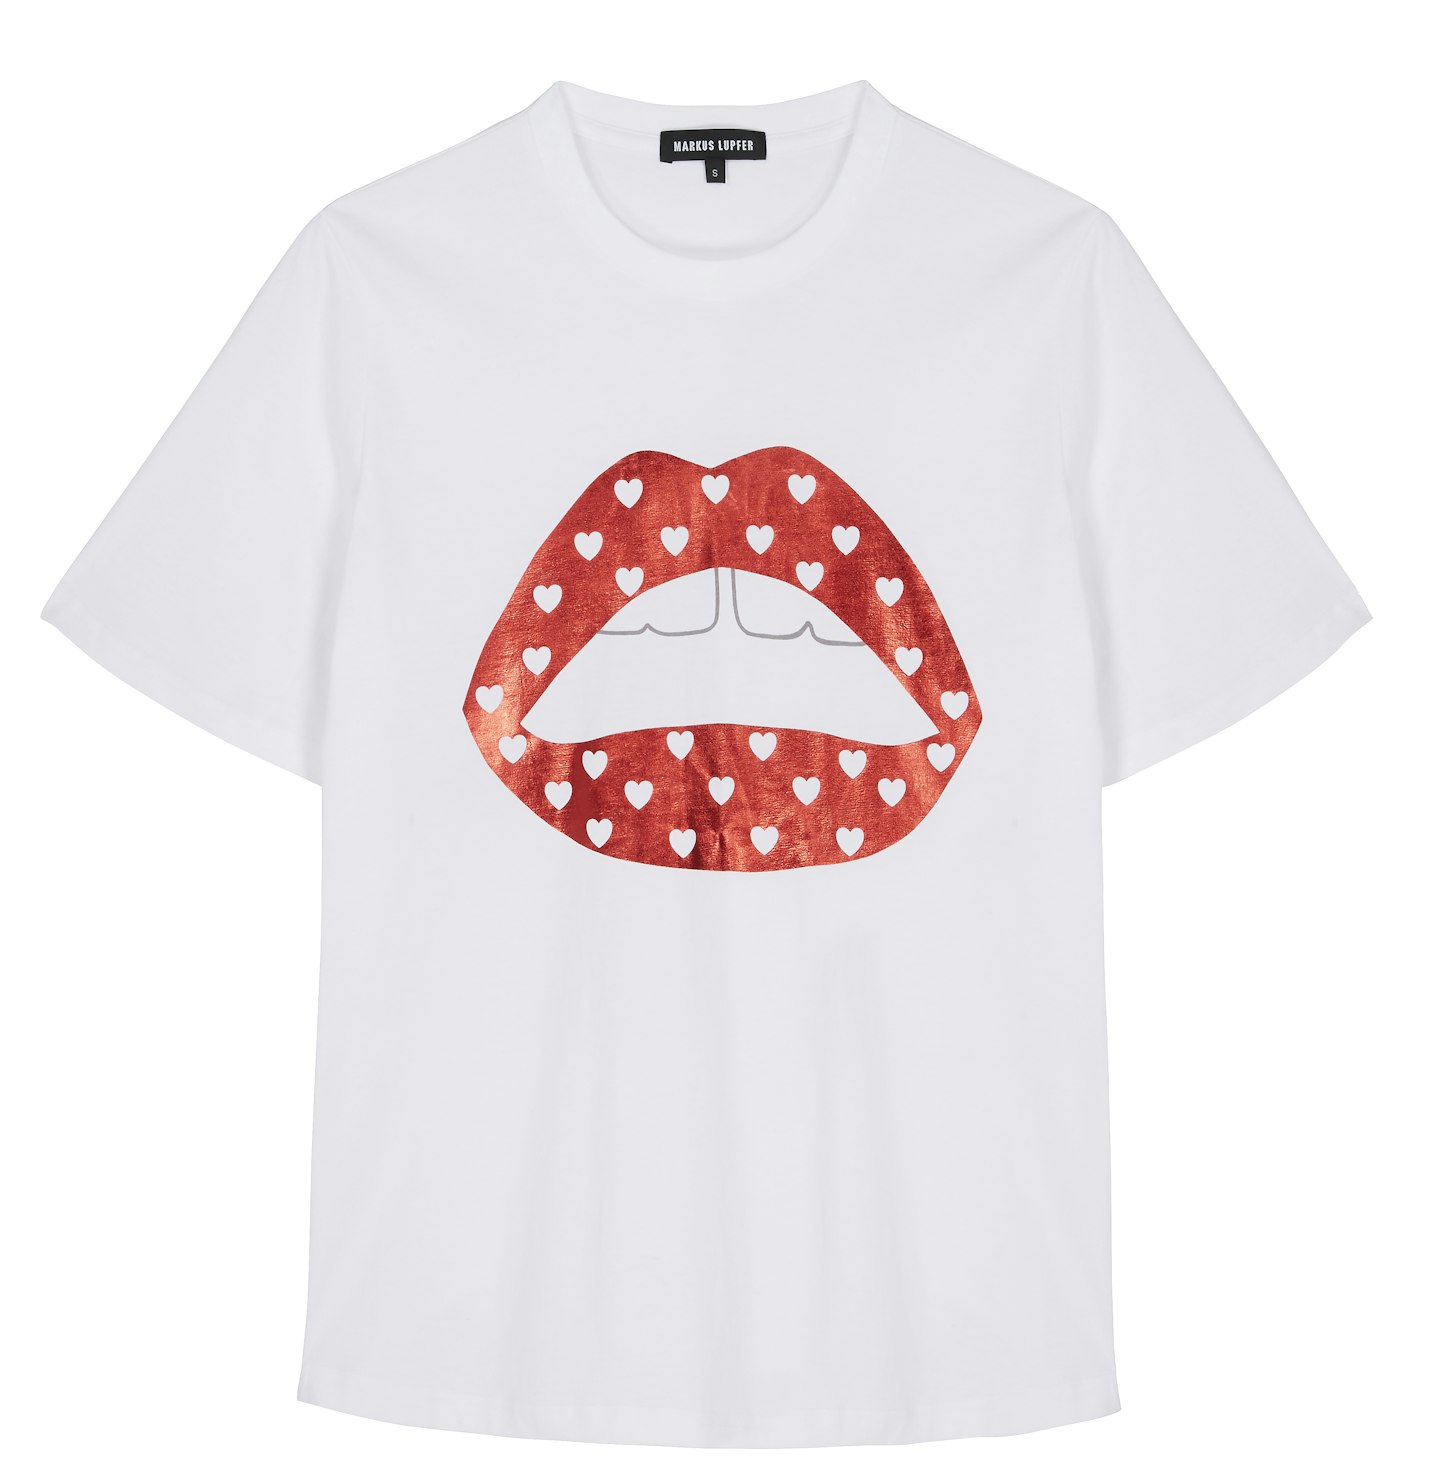 Markus Lupfer, Lips T-Shirt, £49